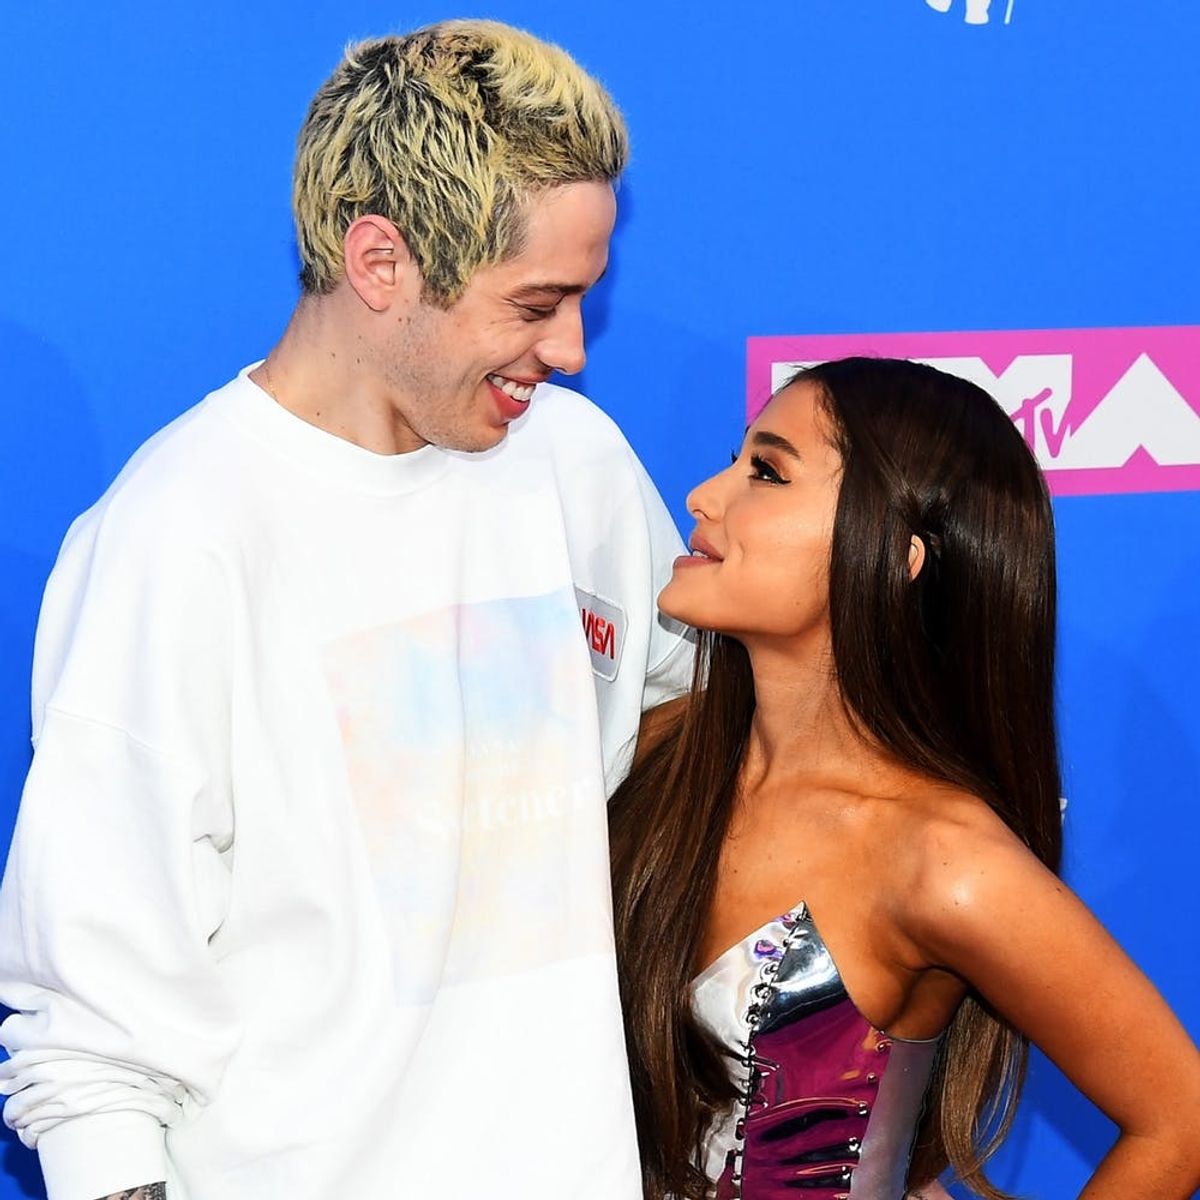 Ariana Grande and Pete Davidson Made Their Red Carpet Debut at the 2018 MTV VMAs